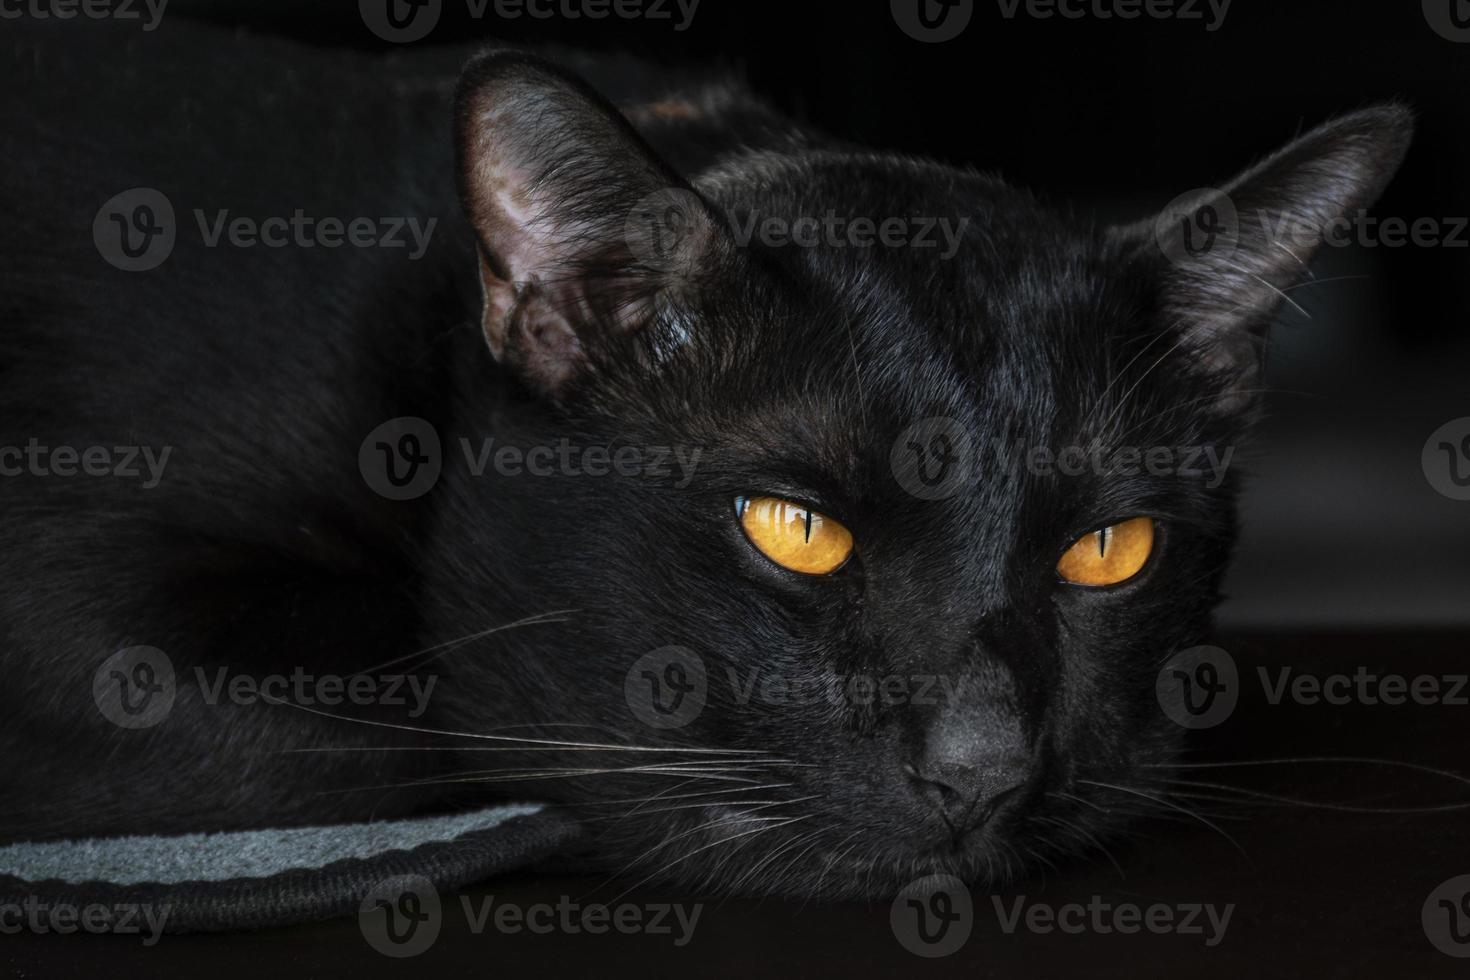 Portrait head black cat on black background photo